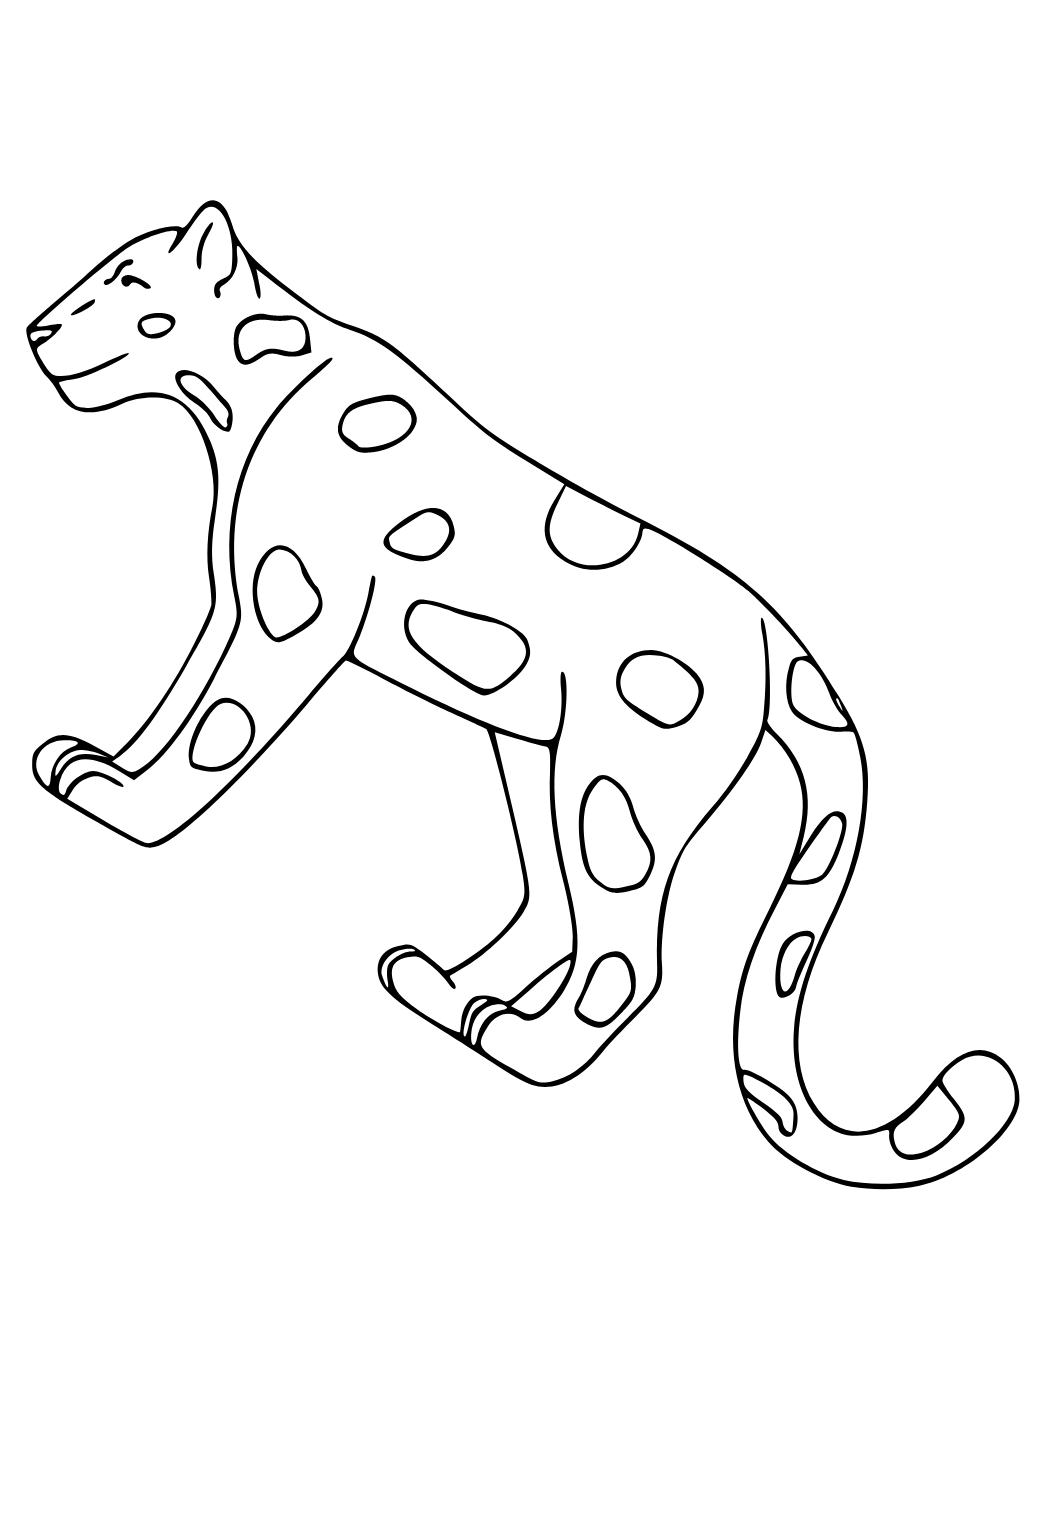 Jaguaras